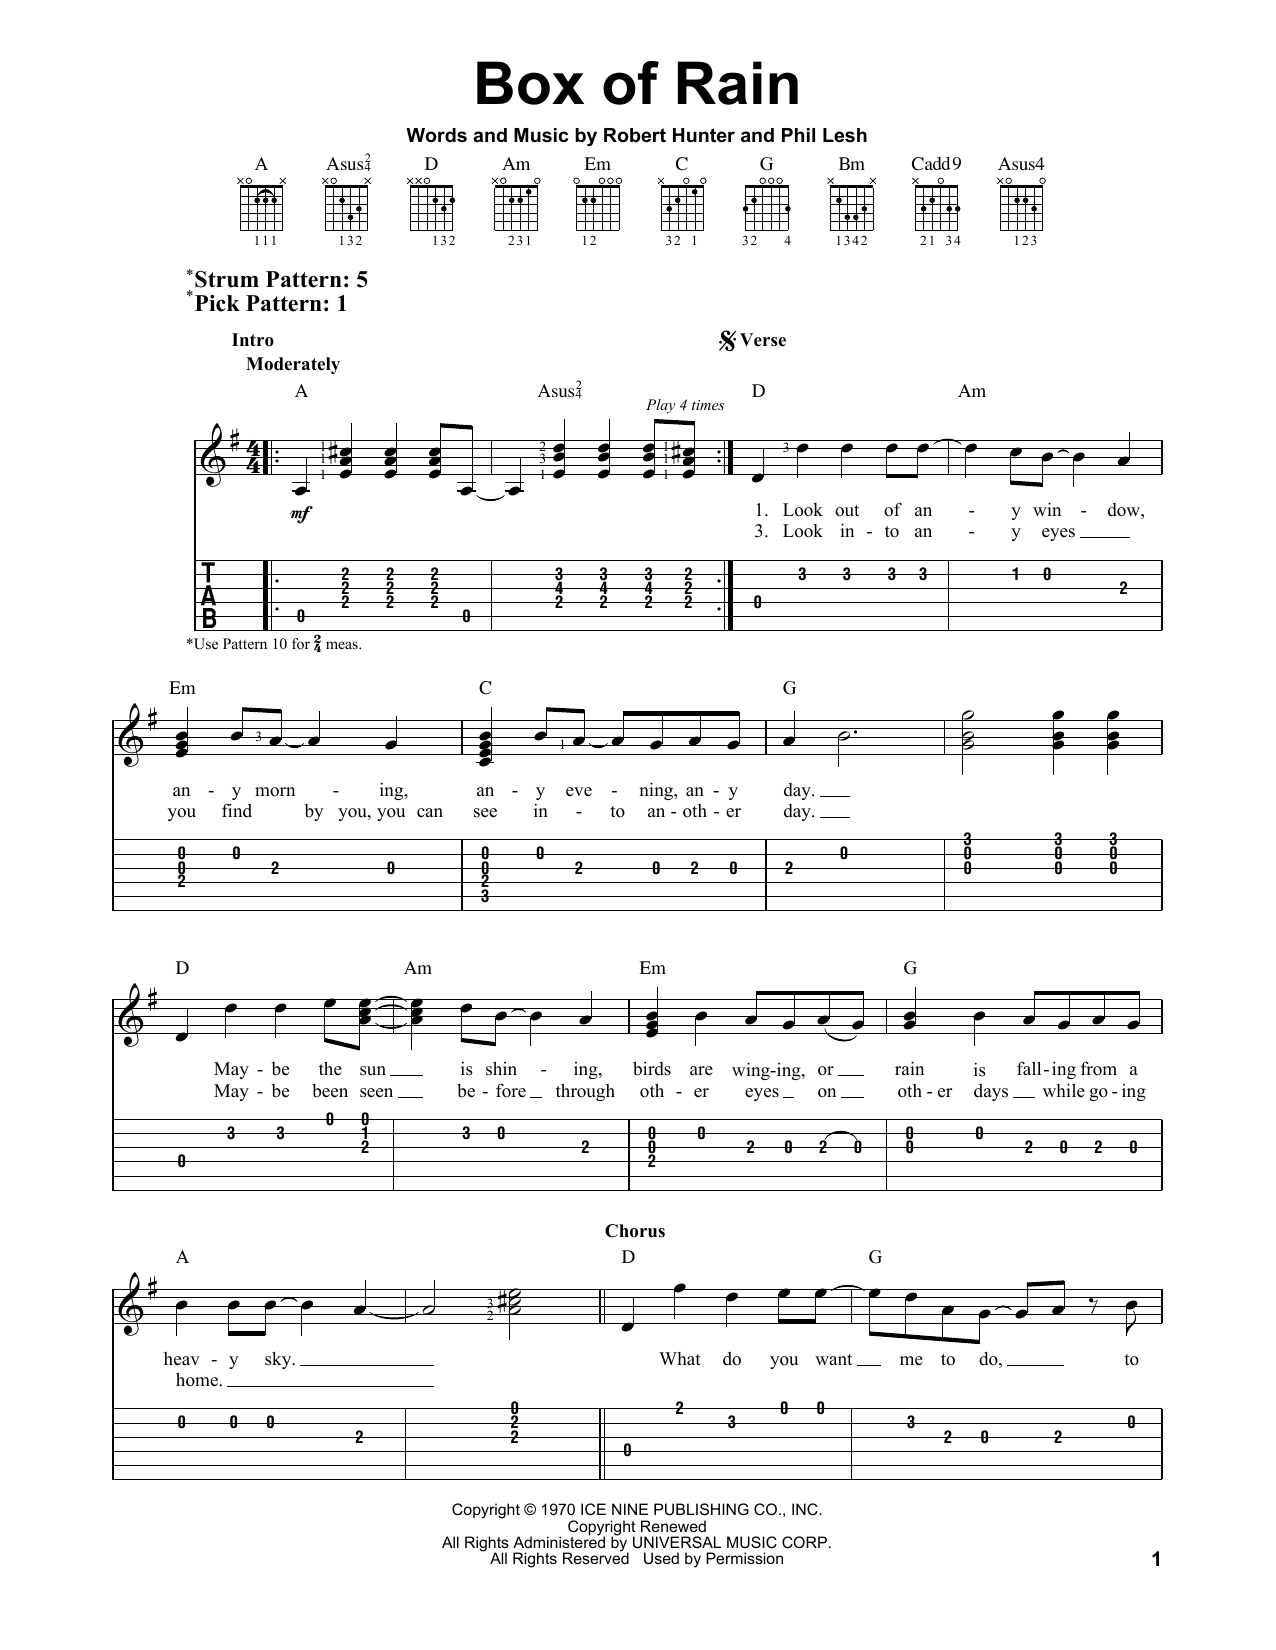 Grateful Dead Box Of Rain Sheet Music Notes & Chords for Guitar Tab - Download or Print PDF